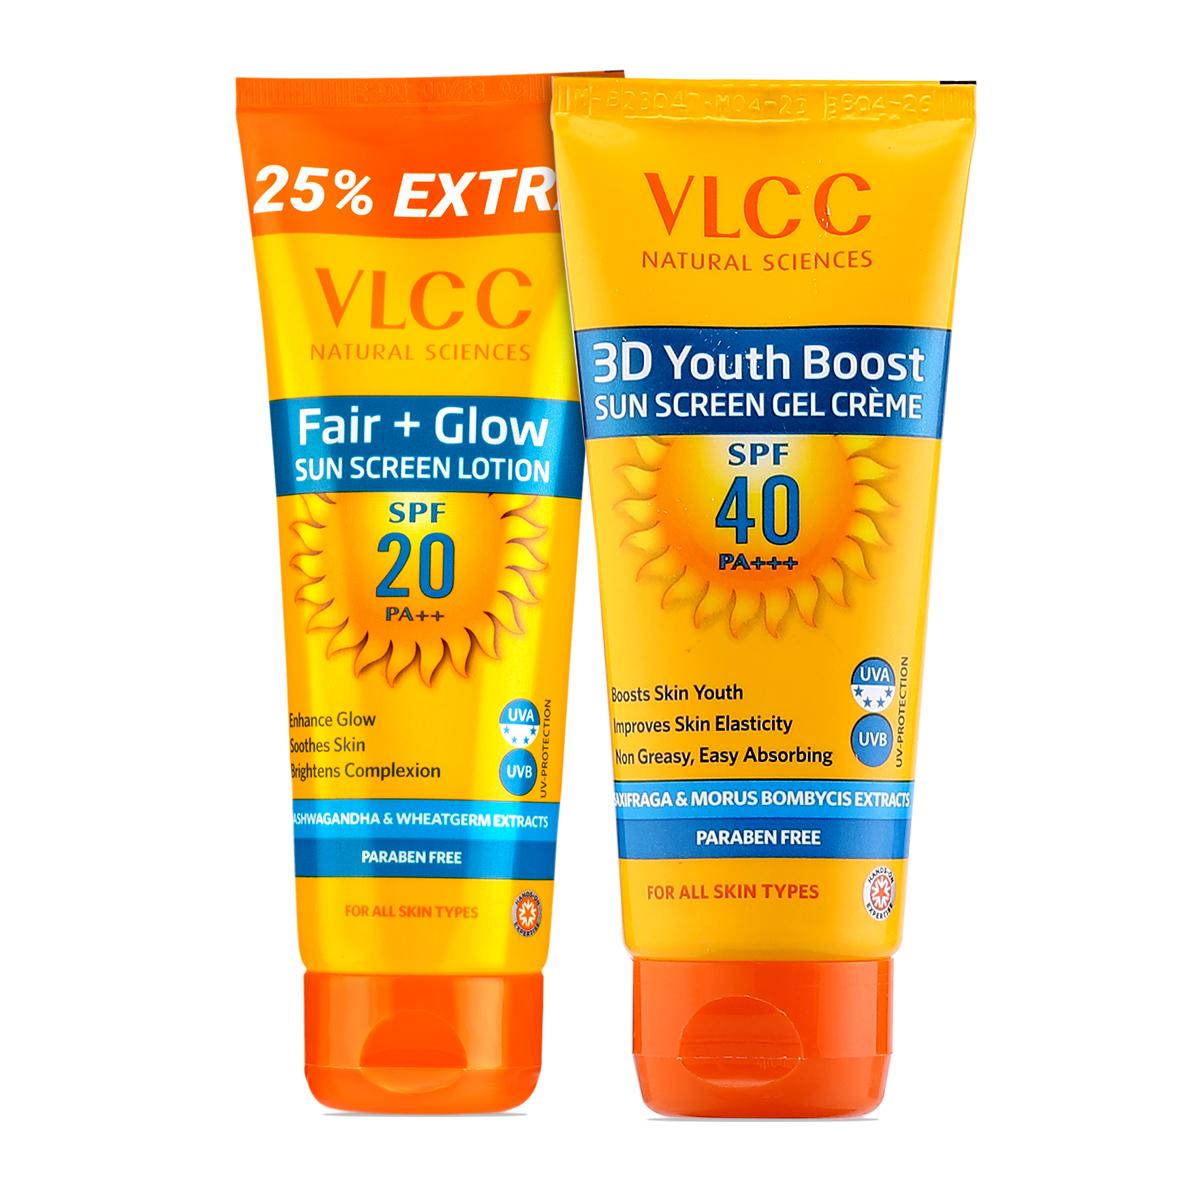 VLCC Fair+Glow SPF 20 & 3D Youth Boost SPF 40 PA +++ Sunscreen